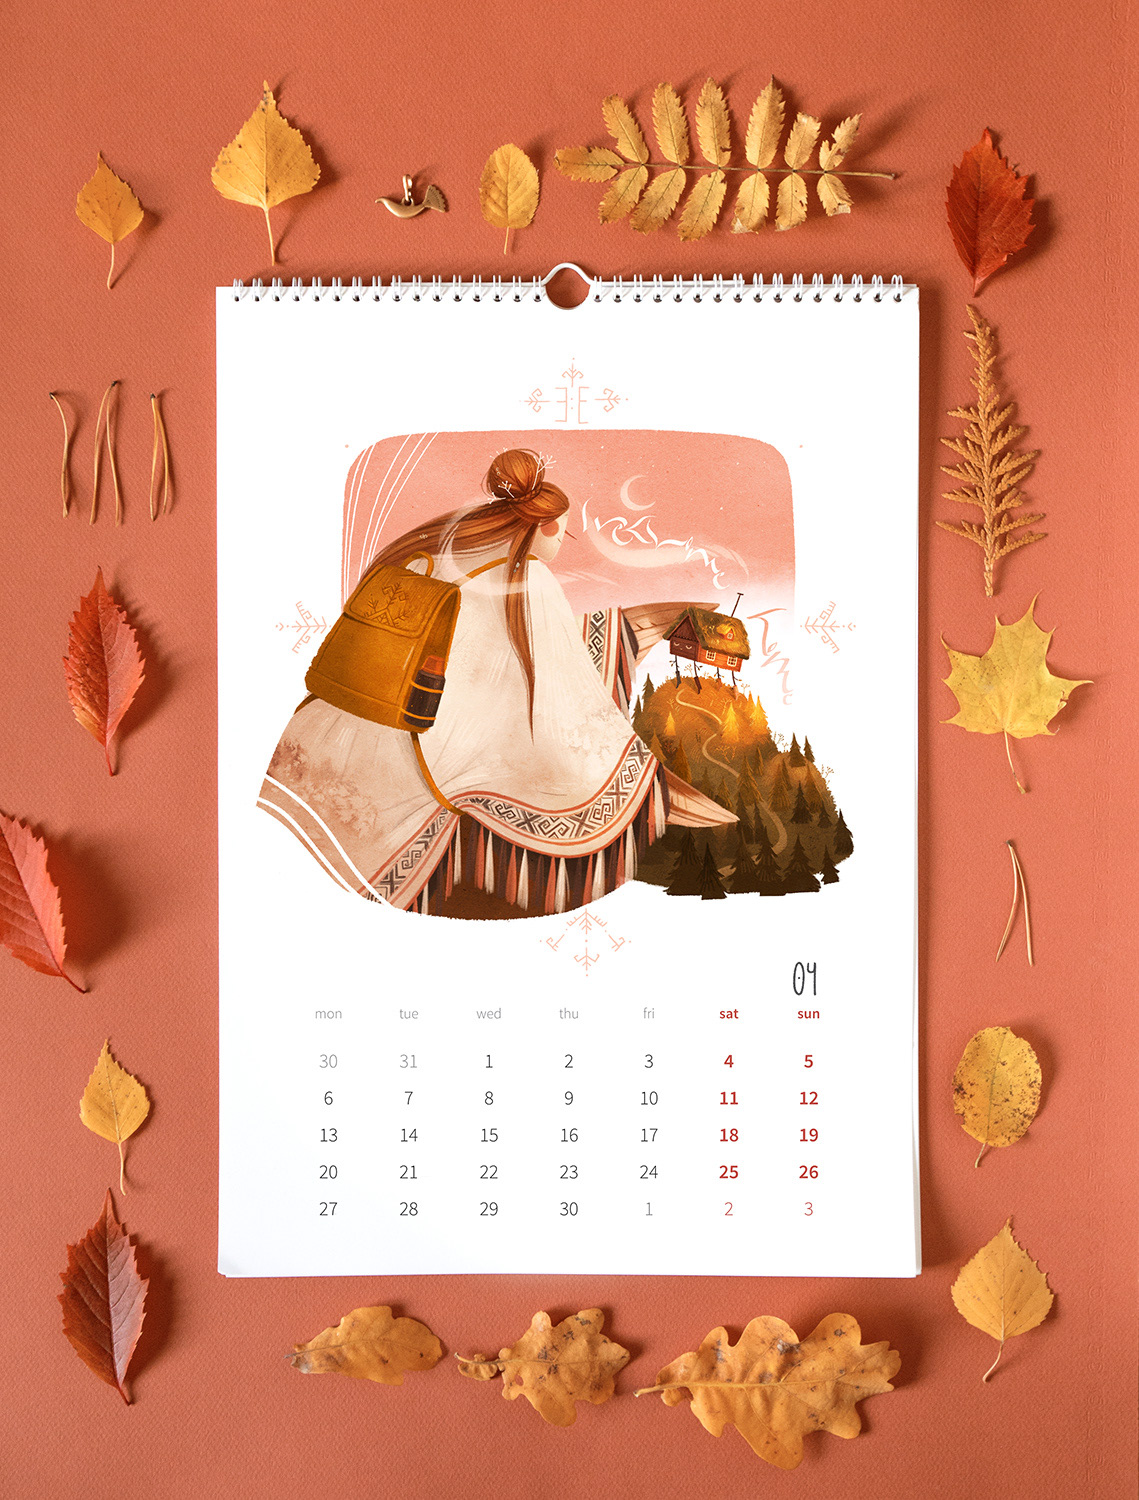 2020 calendar calendar CALENDAR 2020 illustrated calendar folklore illustration tattoed girl redhead freckles FOX calendar design